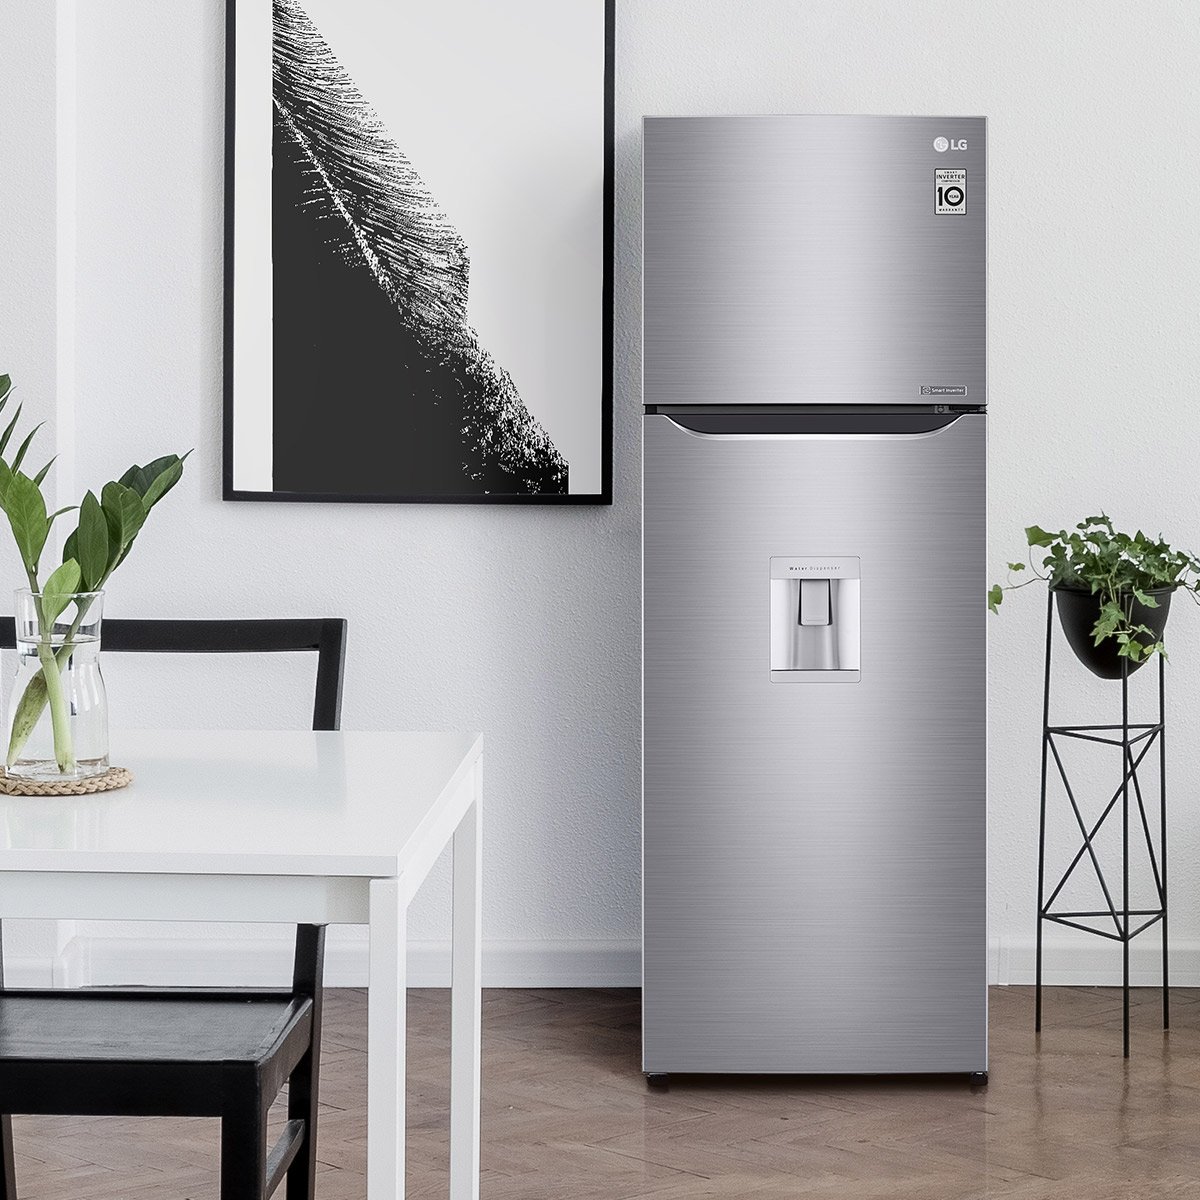 Refrigerador LG Top Mount Smart Inverter con Dispensador de Agua 11 Pies Platino Gt32Wdc